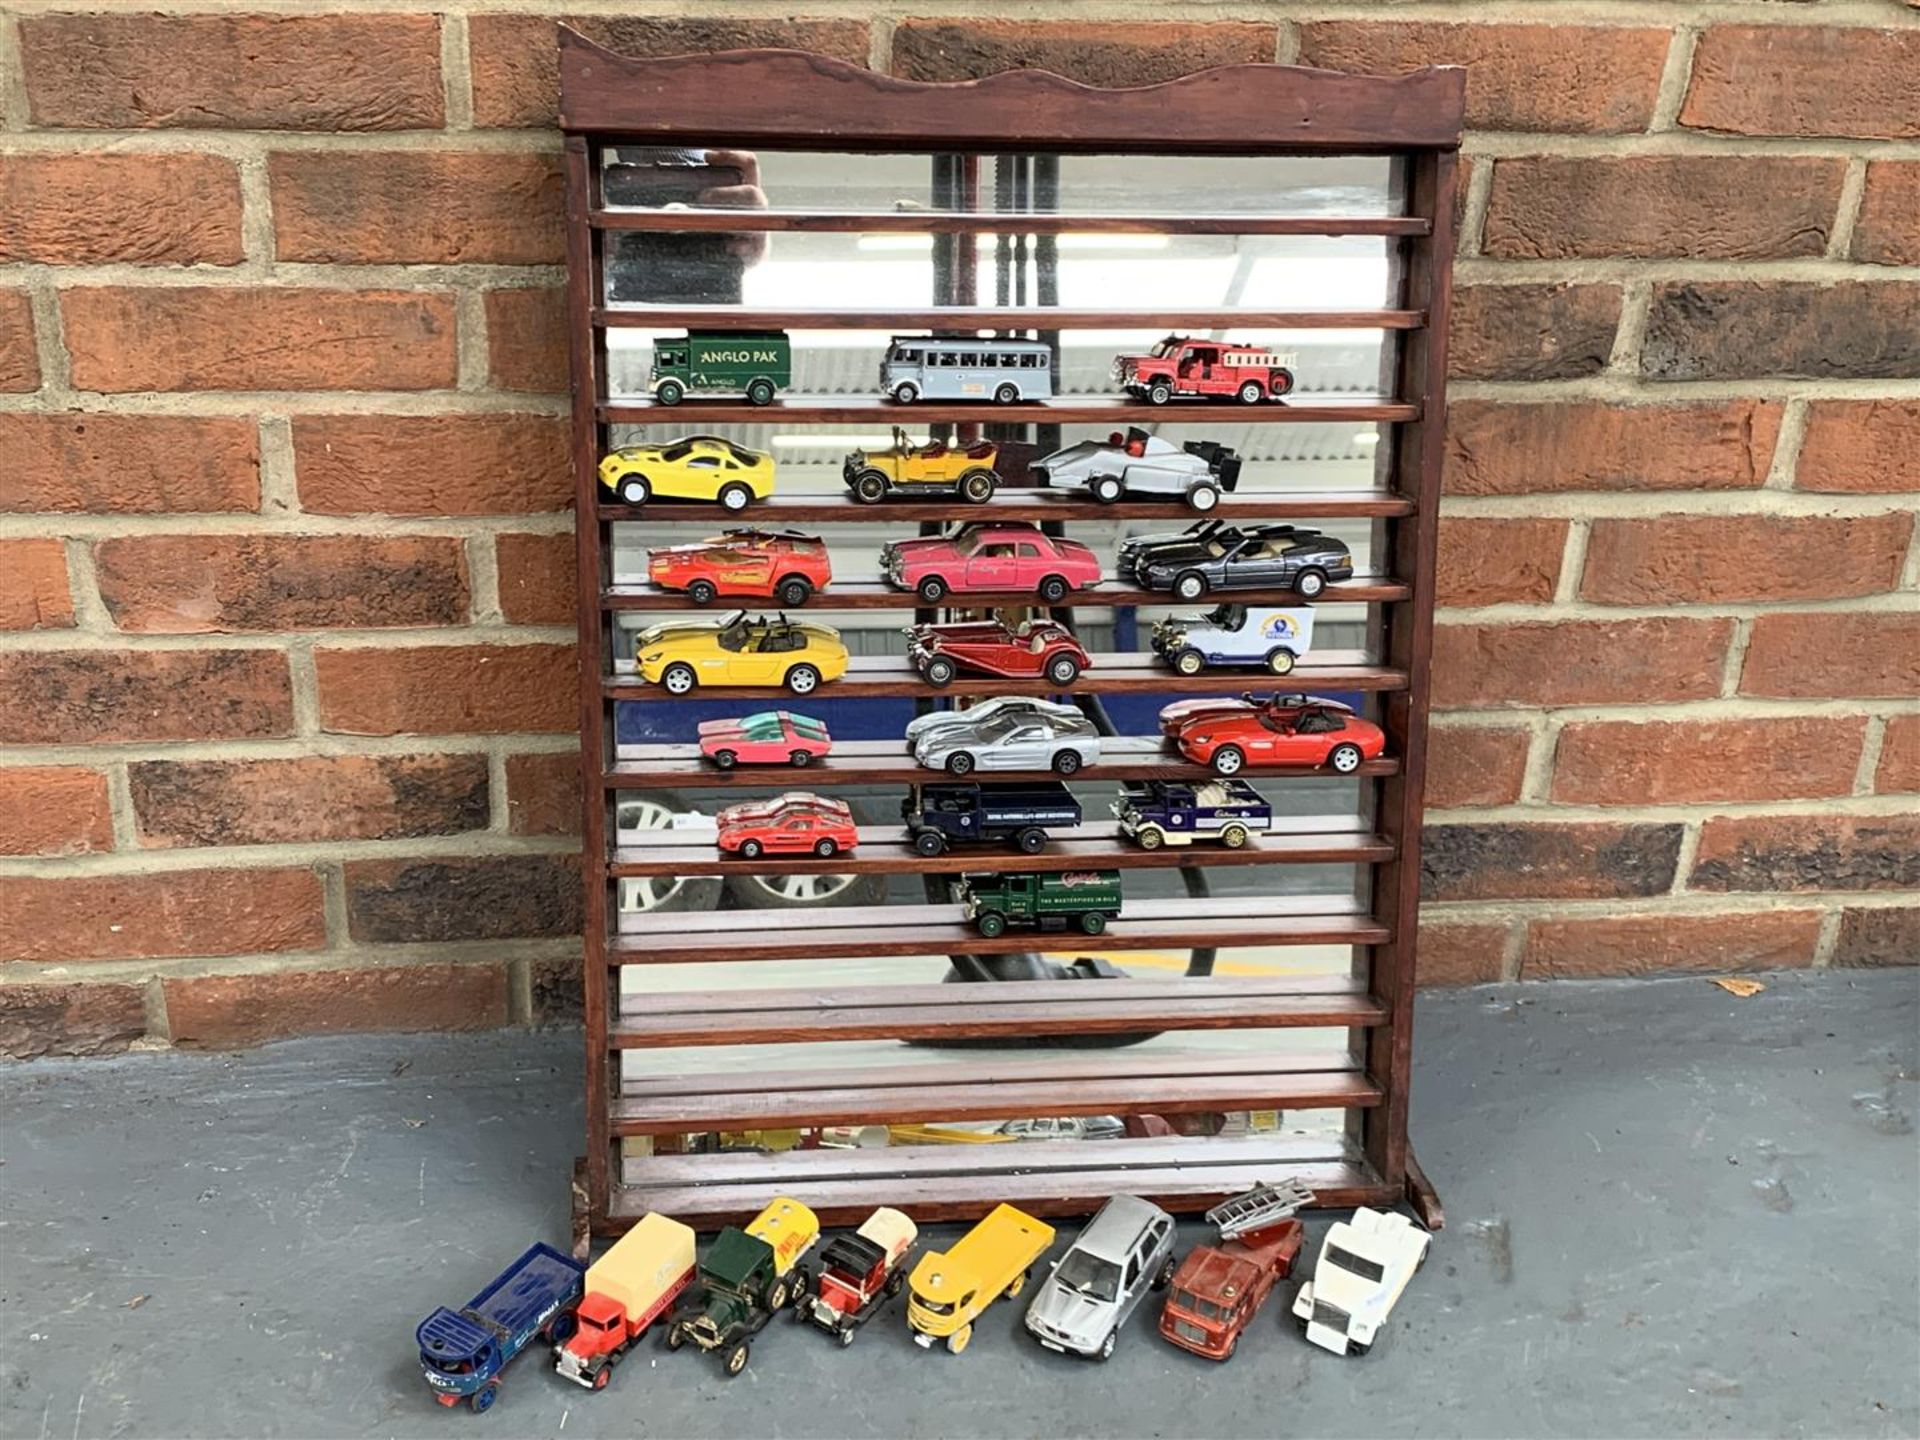 Shelf Of Play Worn Die Cast Toy Cars